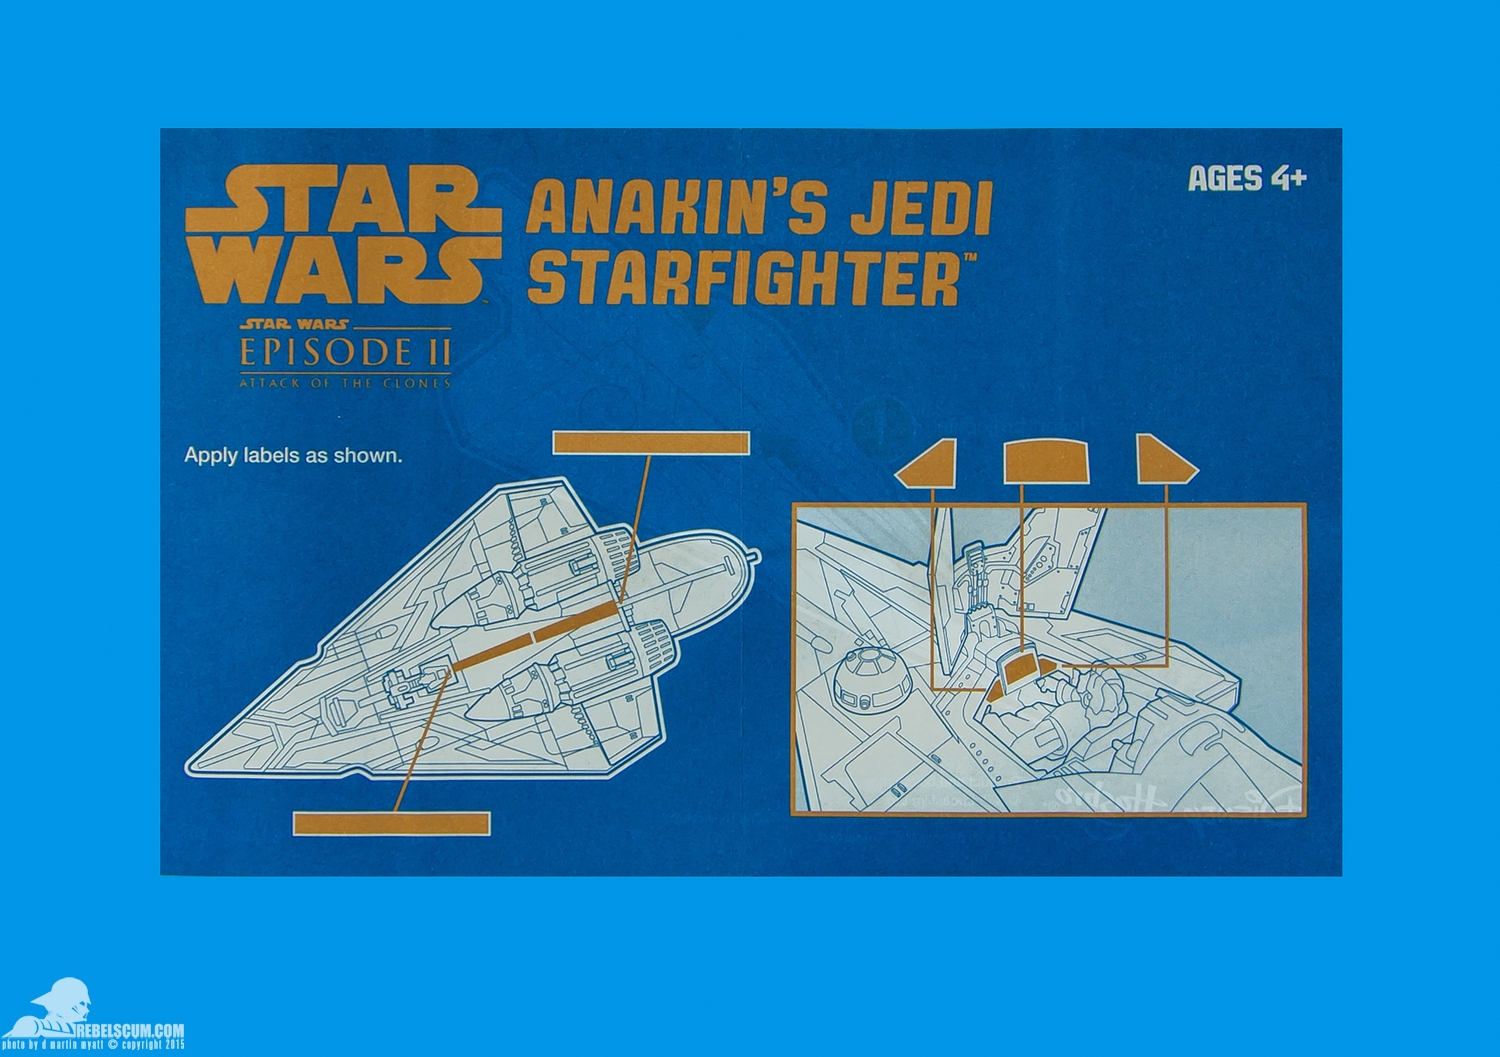 Anakin-Jedi-Starfighter-Rebels-class-II-Vehicle-2014-011.jpg